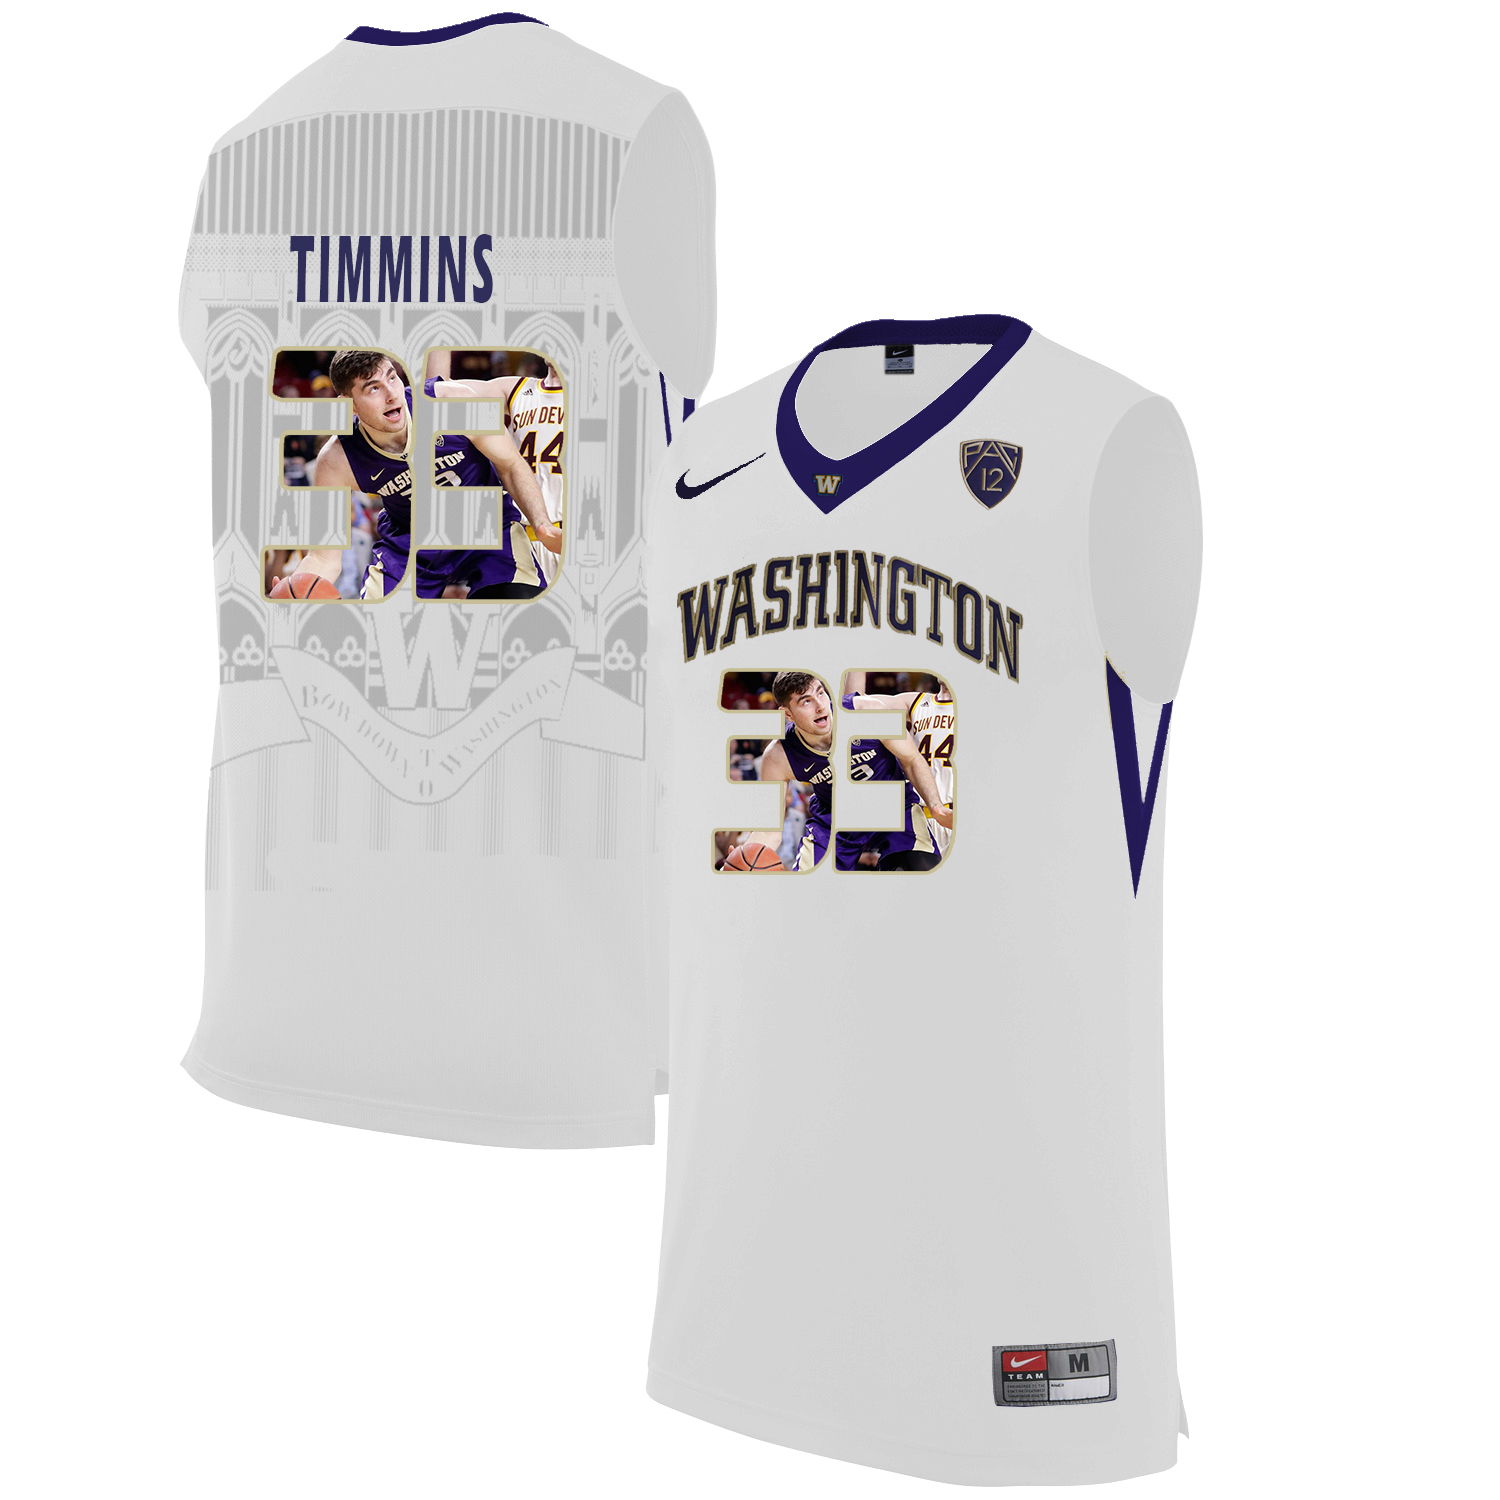 Washington Huskies 33 Sam Timmins White With Portait College Basketball Jersey